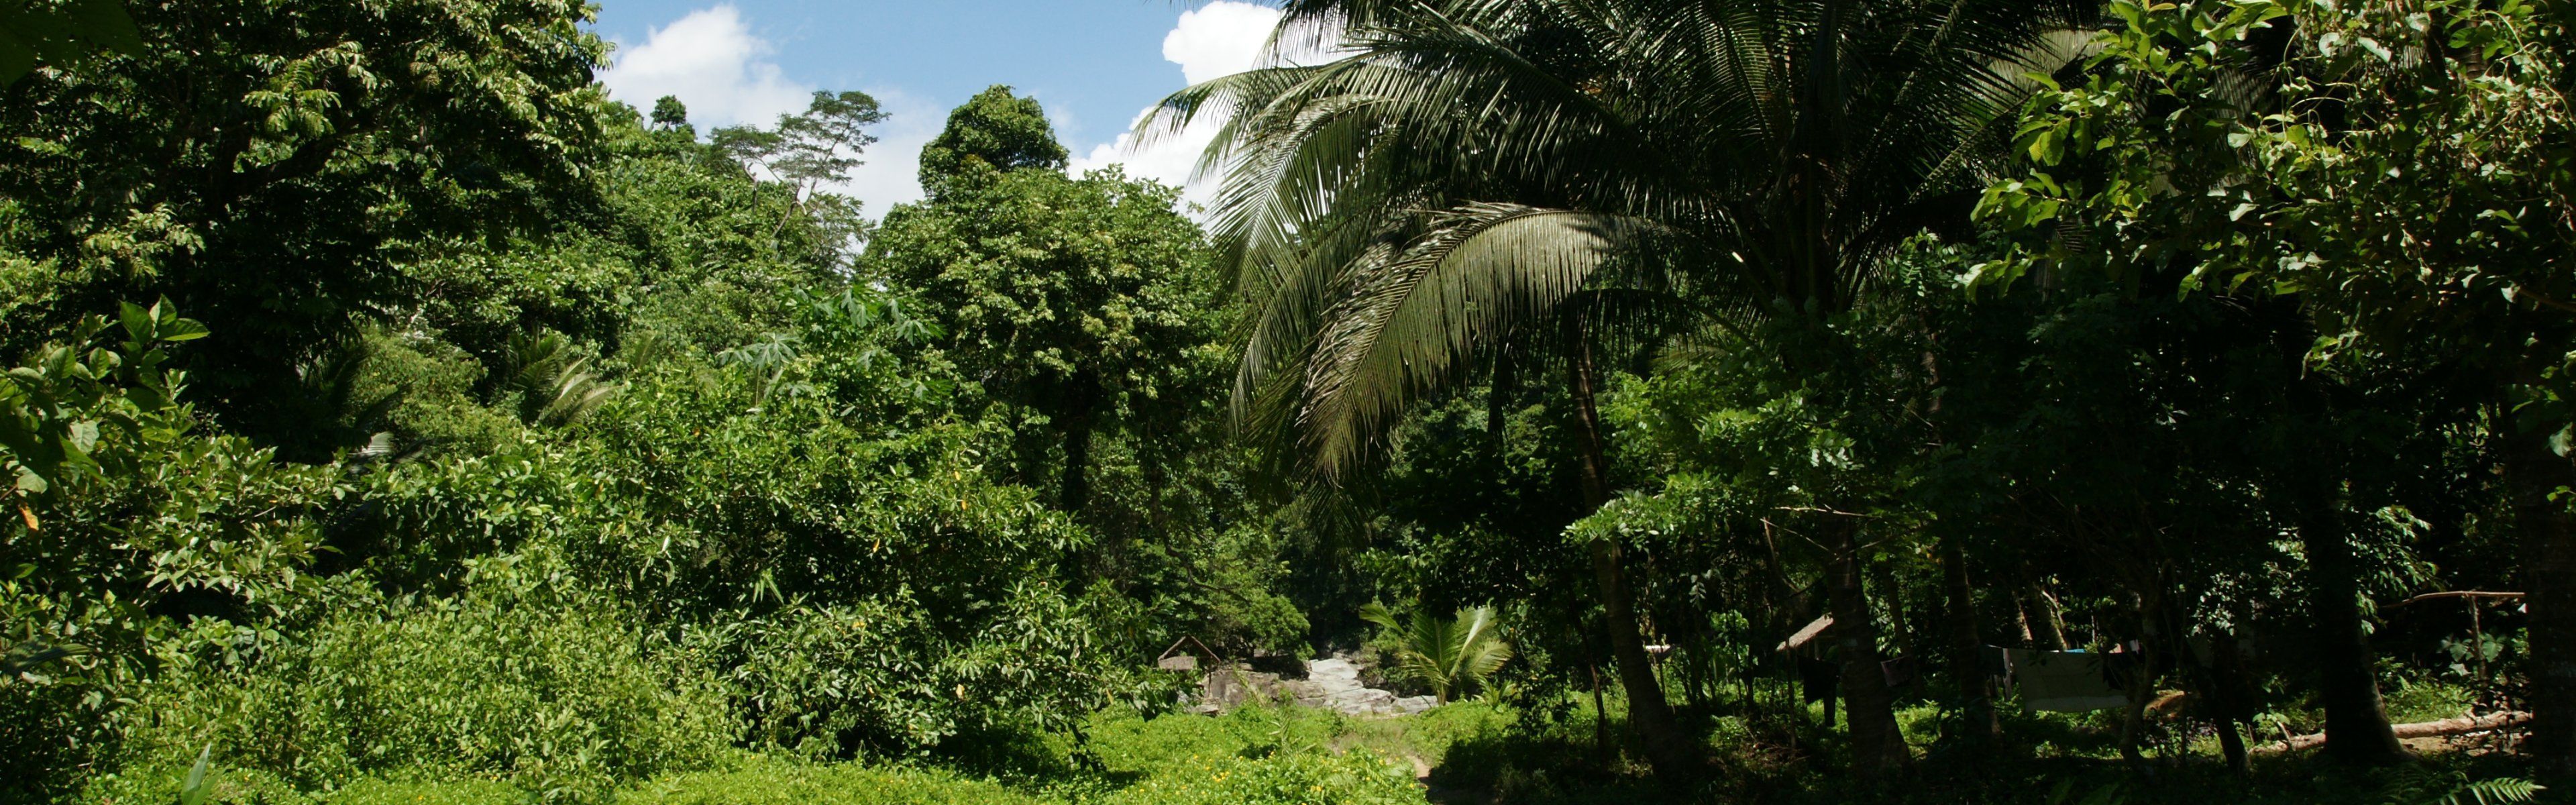 Dual monitor background: Tropical nature, river, jungle vegetation